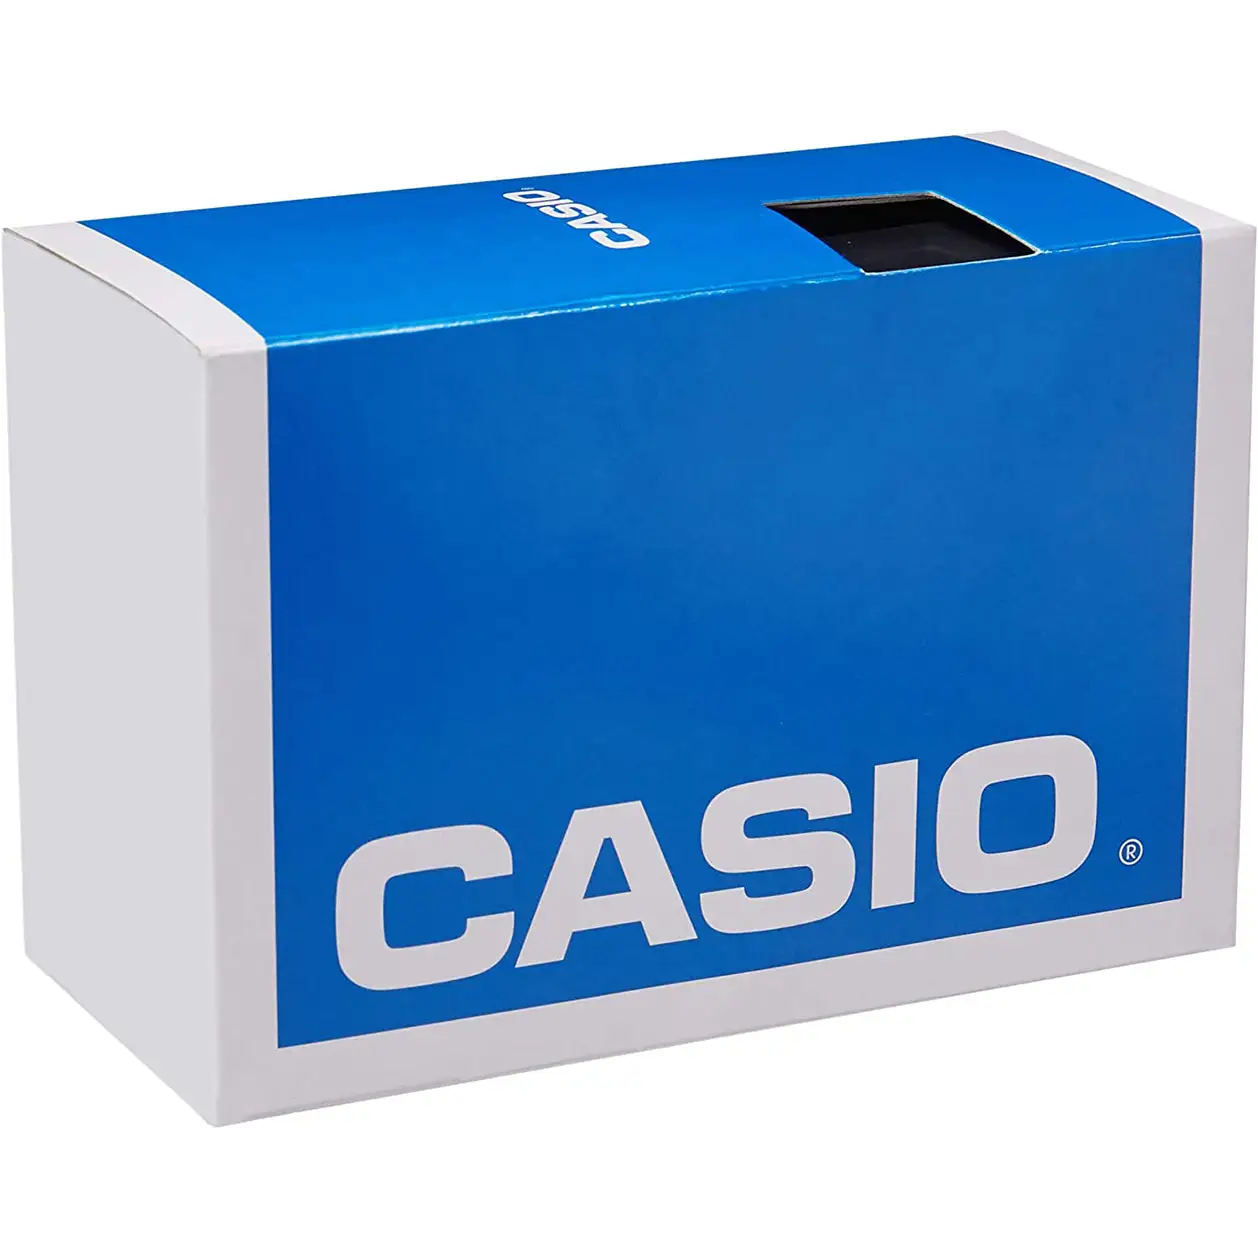 Casio Men’s Quartz Champagne Dial Blue Resin Watch